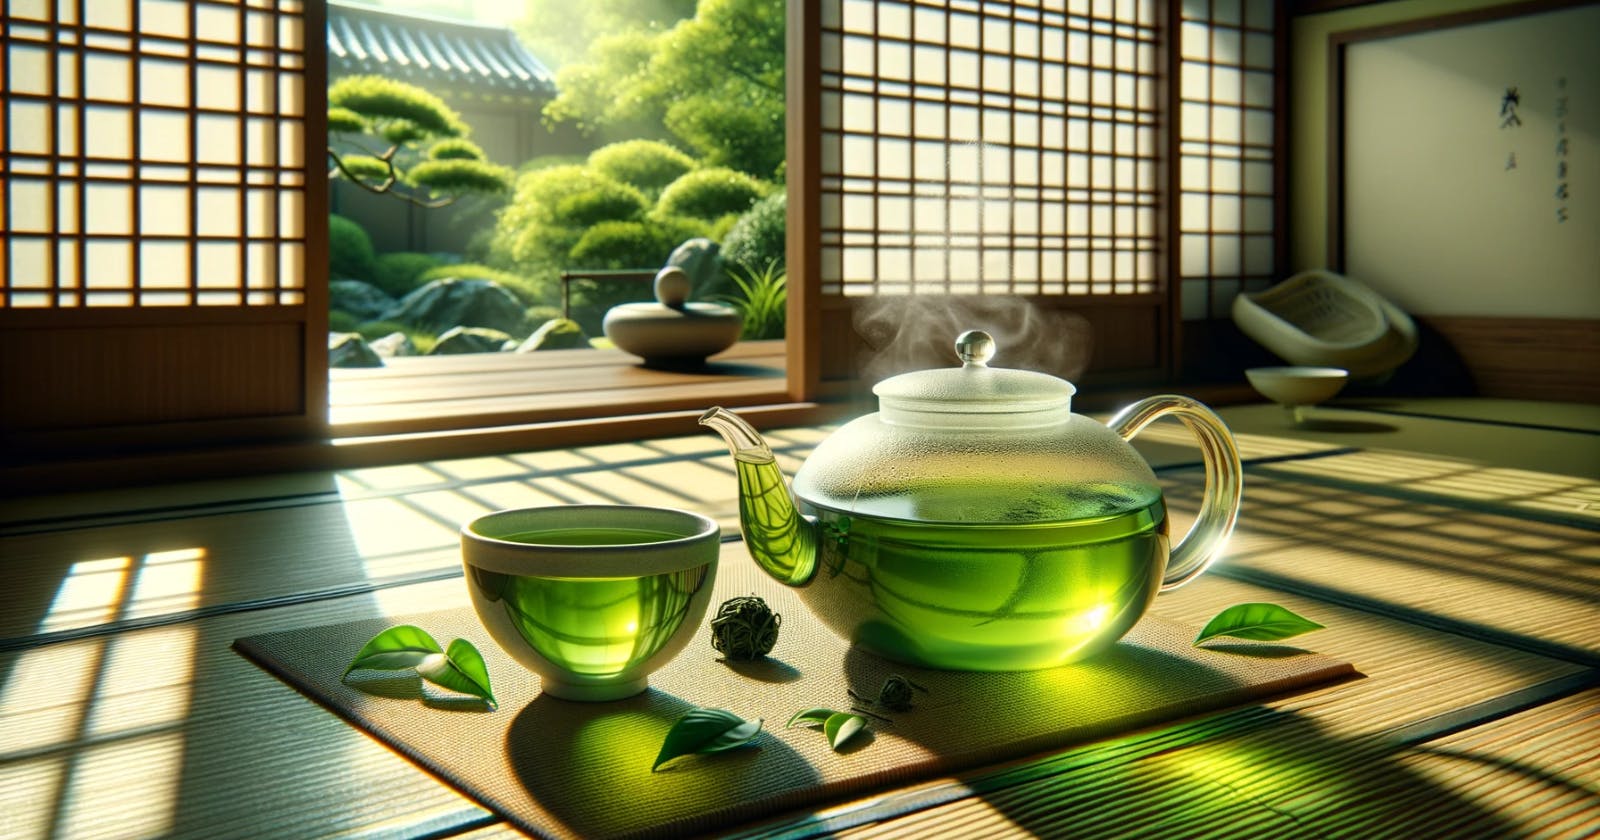 What Does Green Tea Taste Like?